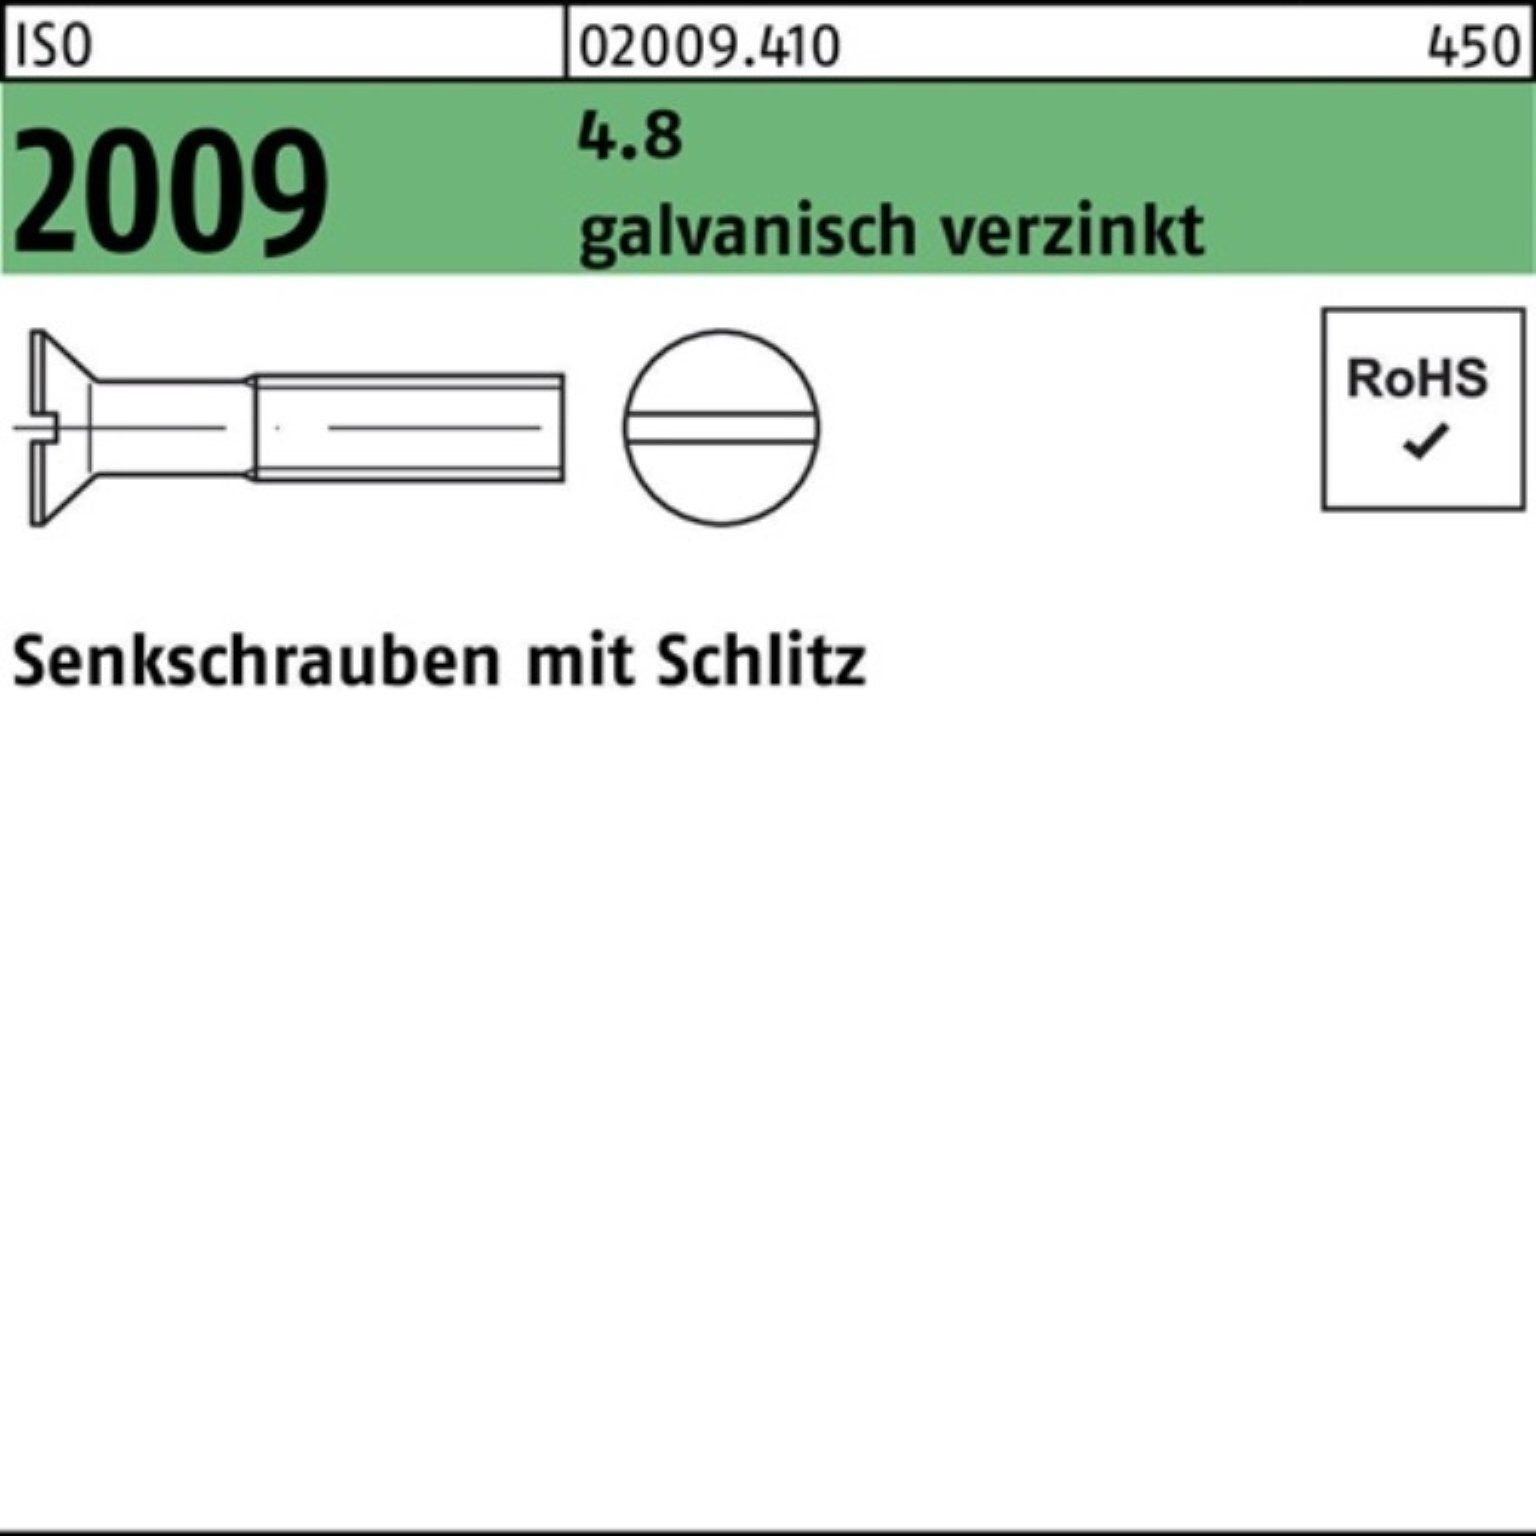 Senkschraube St 2009 4.8 M6x Pack Schlitz 45 500er ISO Reyher 500 galv.verz. Senkschraube